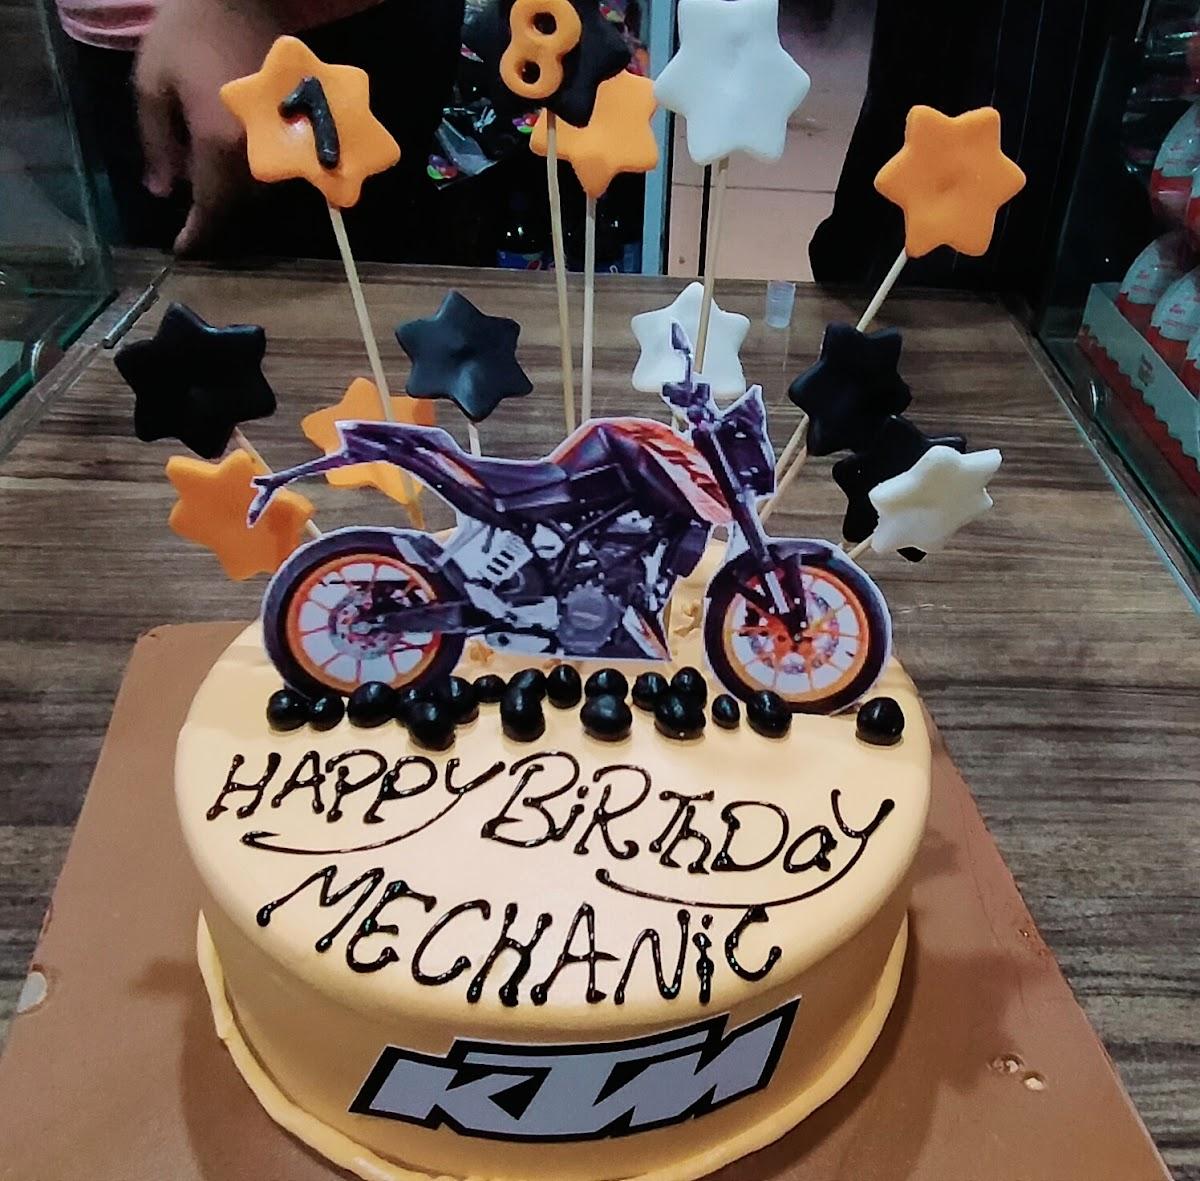 KTM Duke bike cake. Ideal for the bike enthusiast 🍰😊🚴 | Motorcycle  birthday cakes, Bike cakes, Motorcycle cake